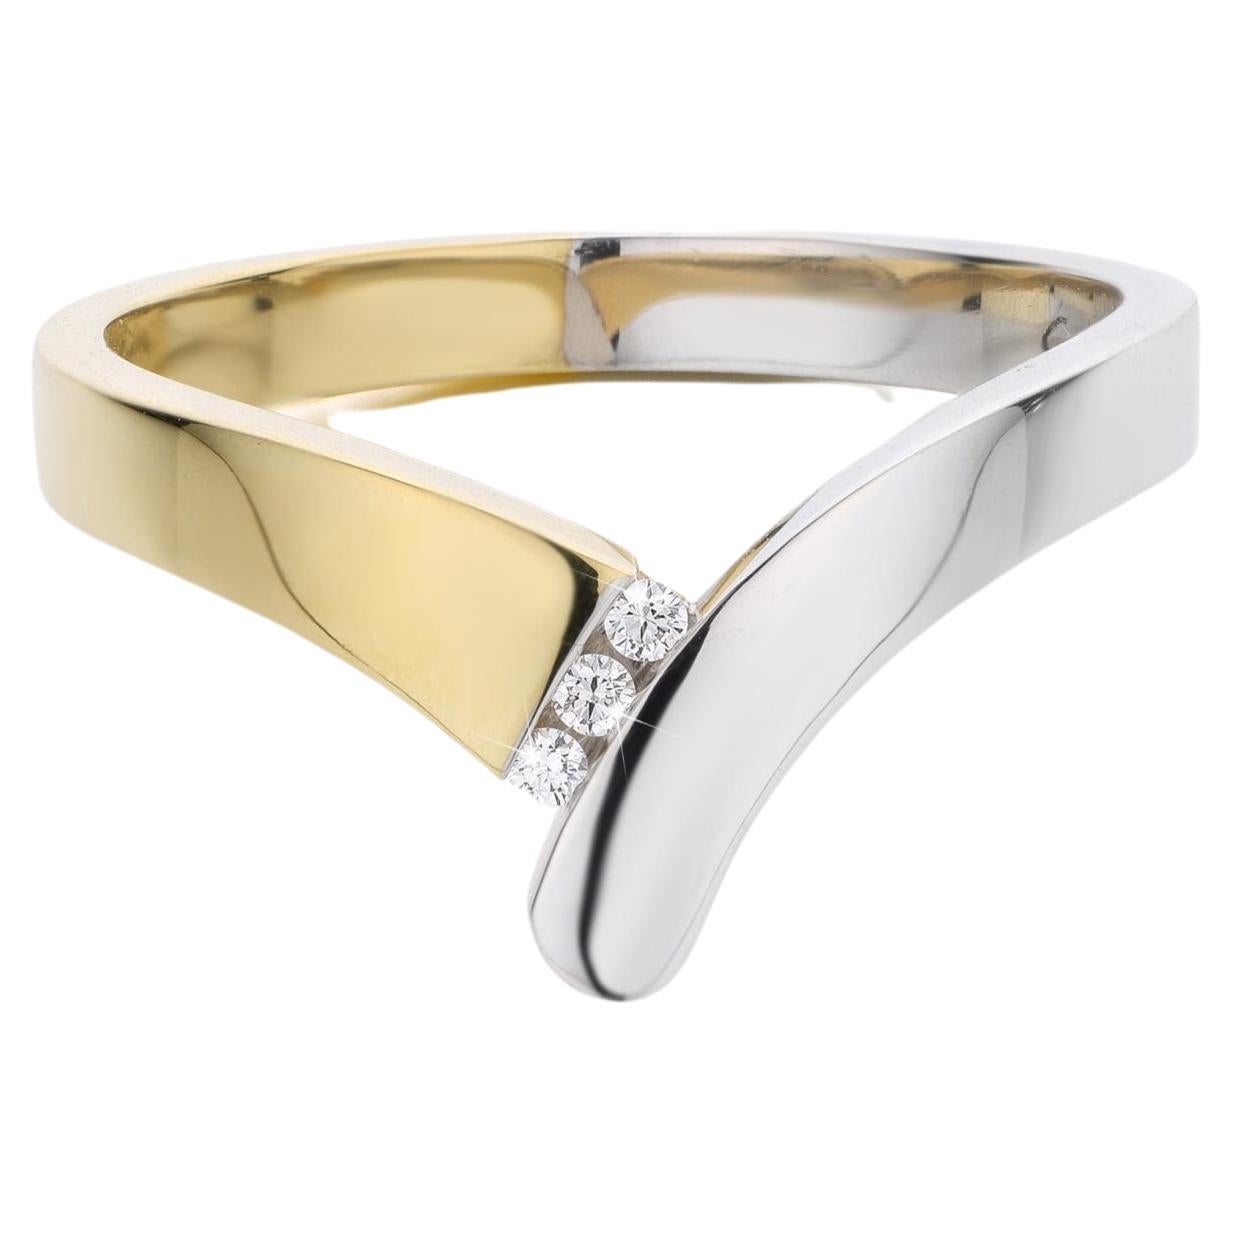 Cober with 3 0.01 Carat Brilliant-Cut Diamonds Fancy bi-color white-yellow Ring